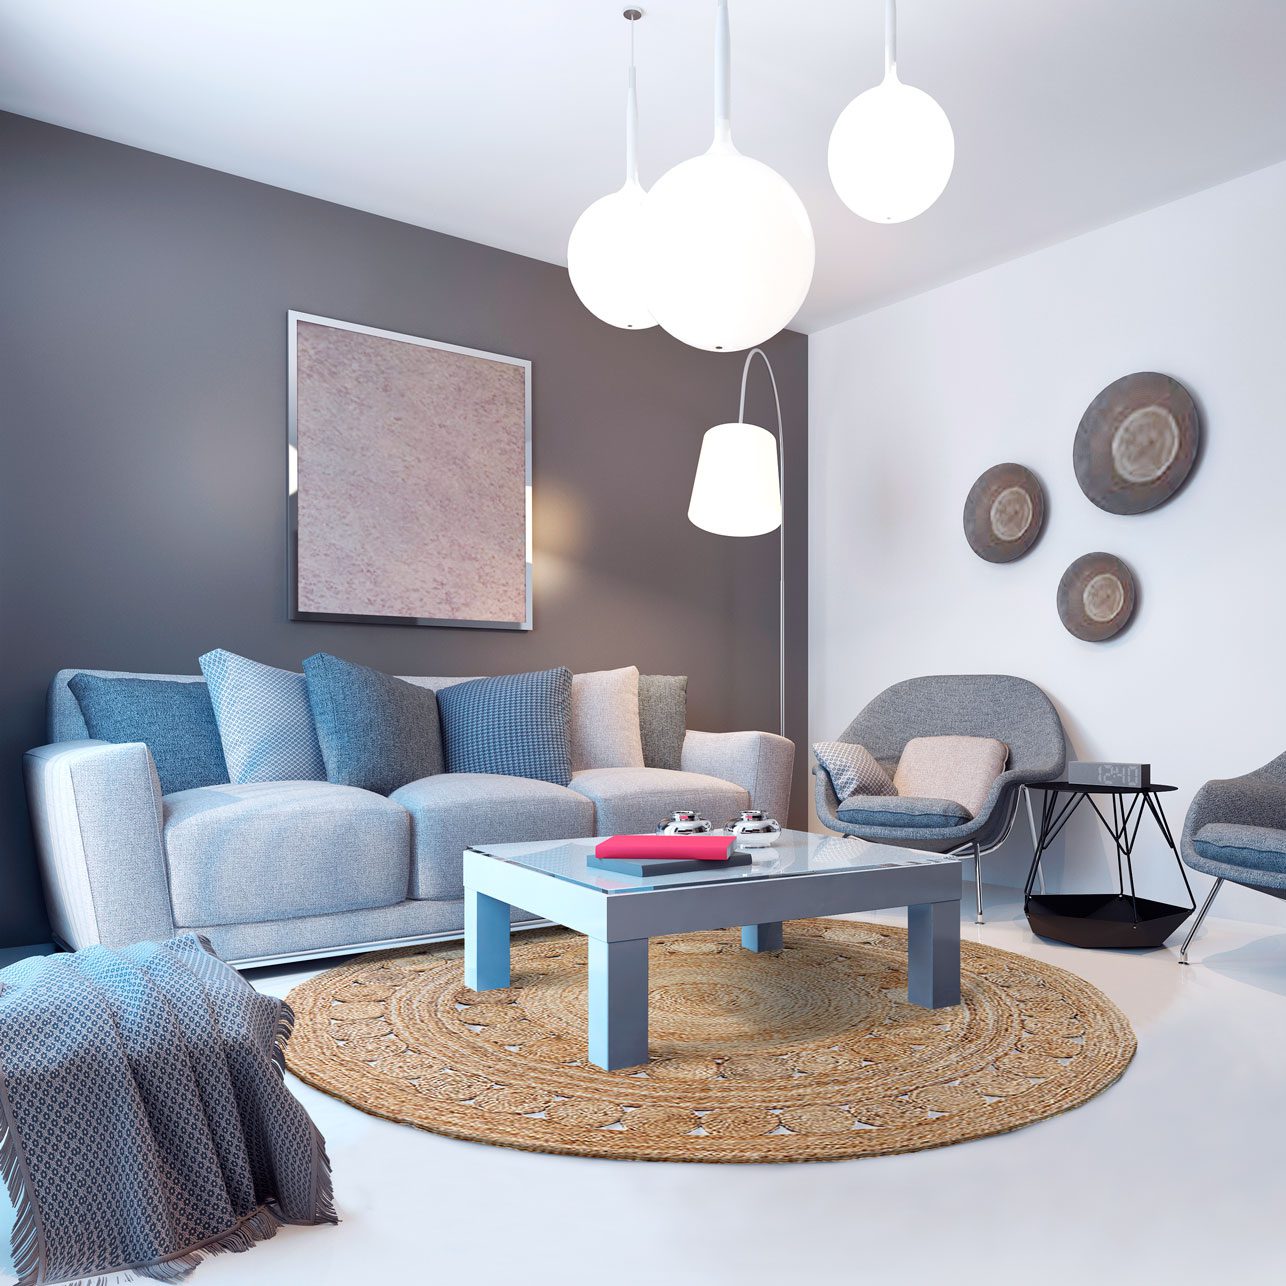 Design of modern lounge